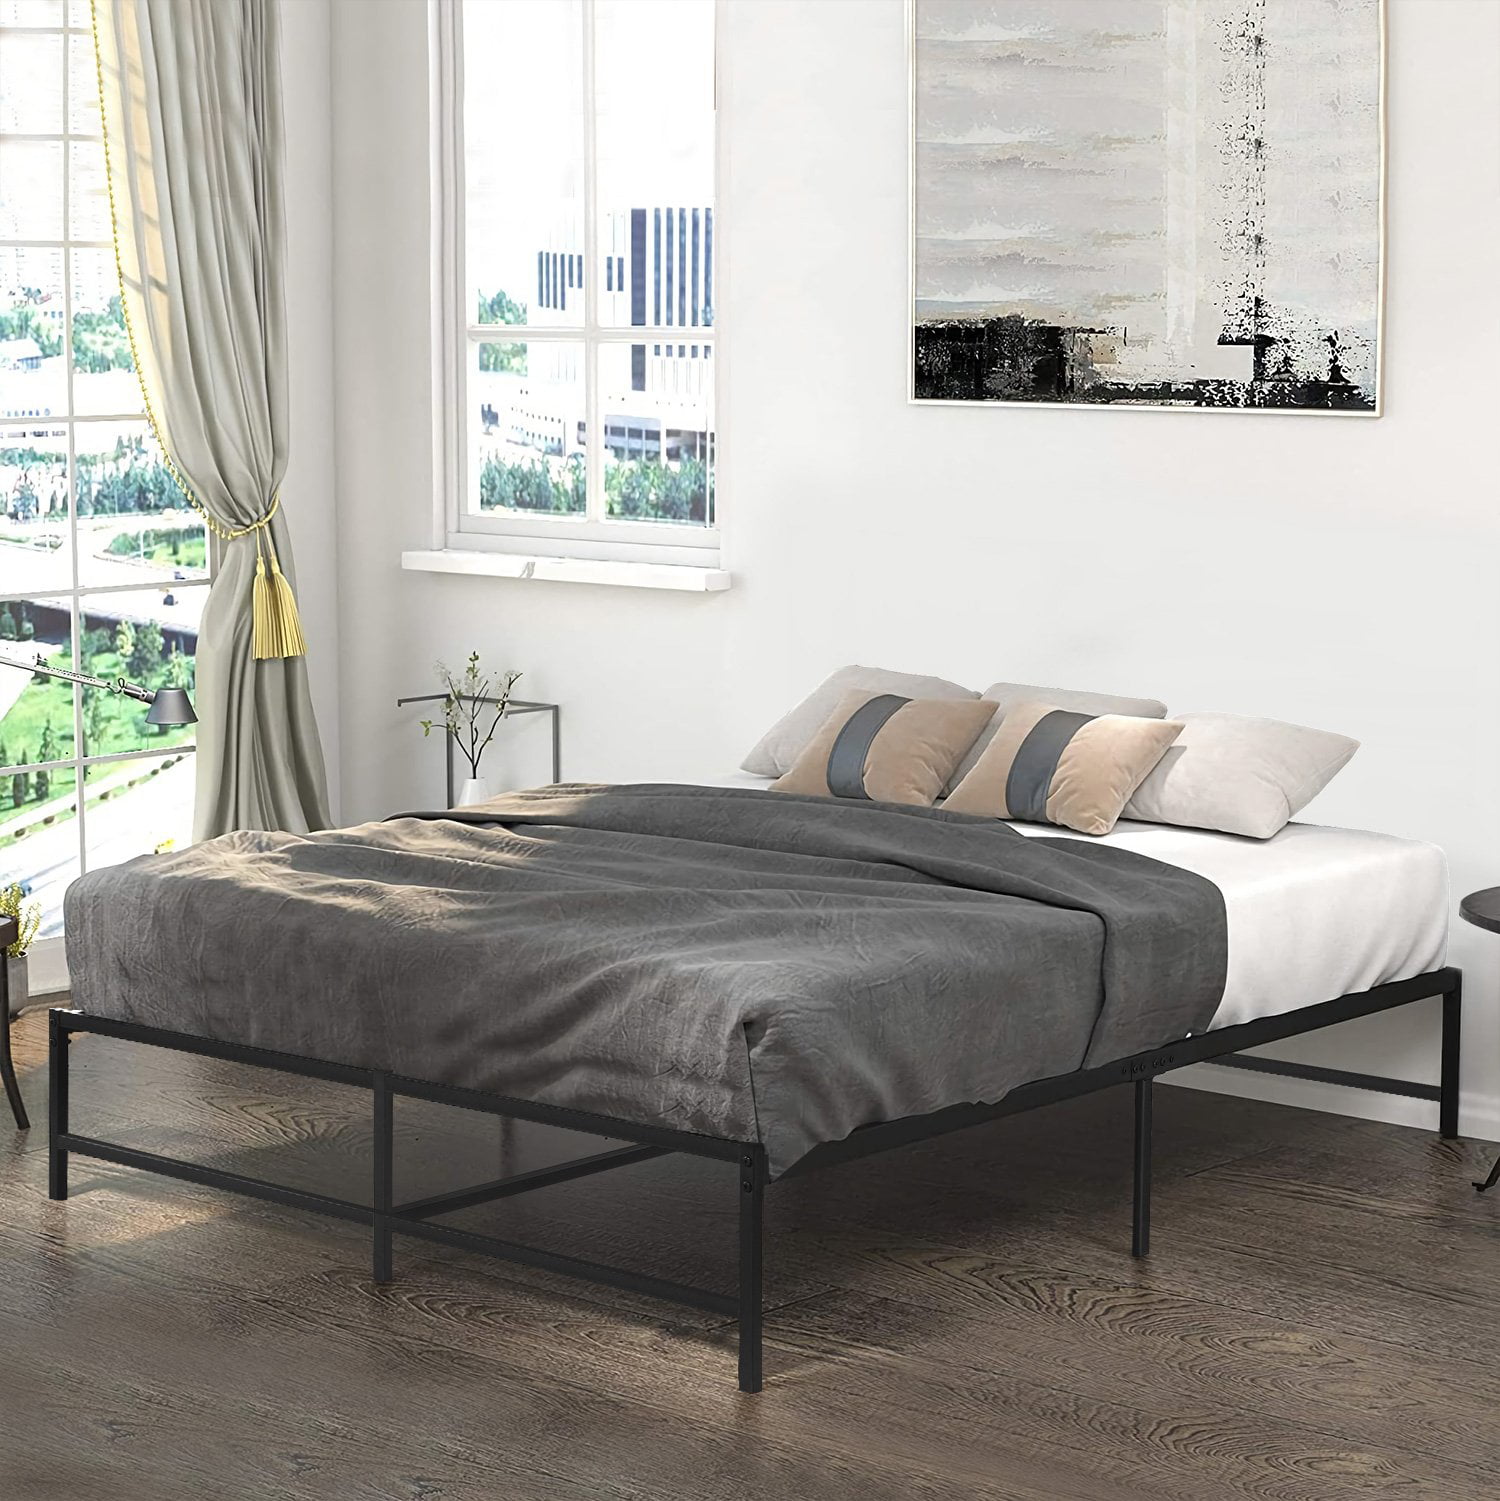 Vecelo King Size Metal Platform Bed, How To Fix Metal Bed Frame Support